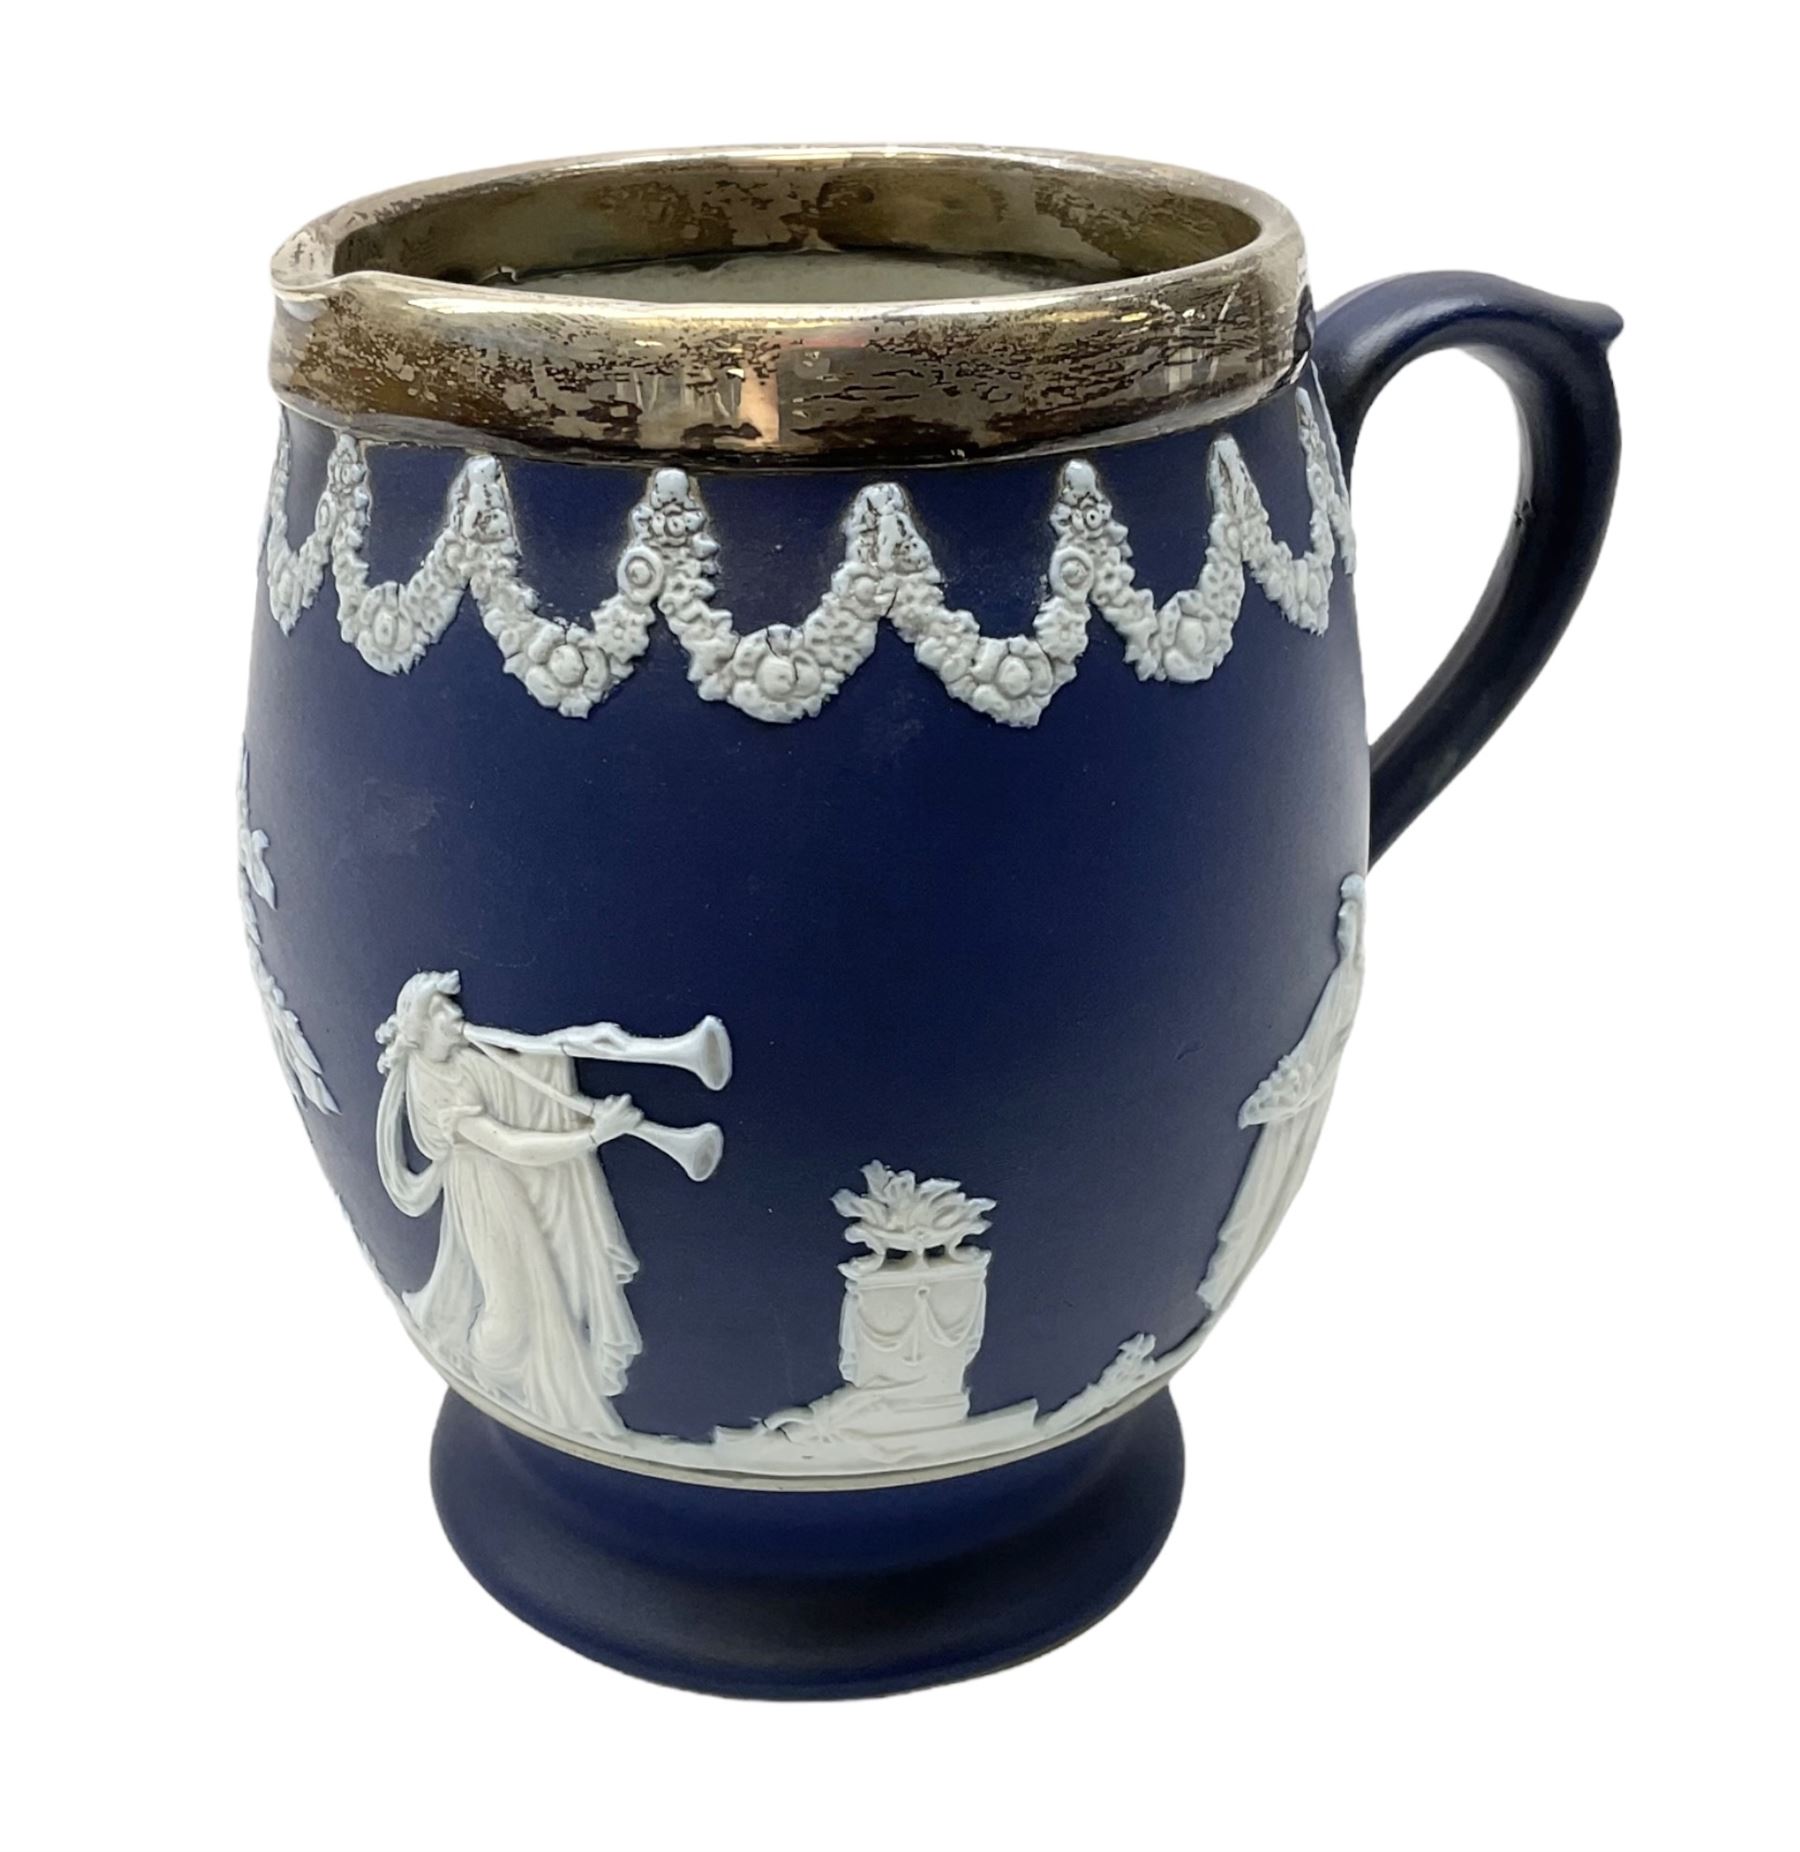 Adams Tunstall blue Jasperware jug with silver collar